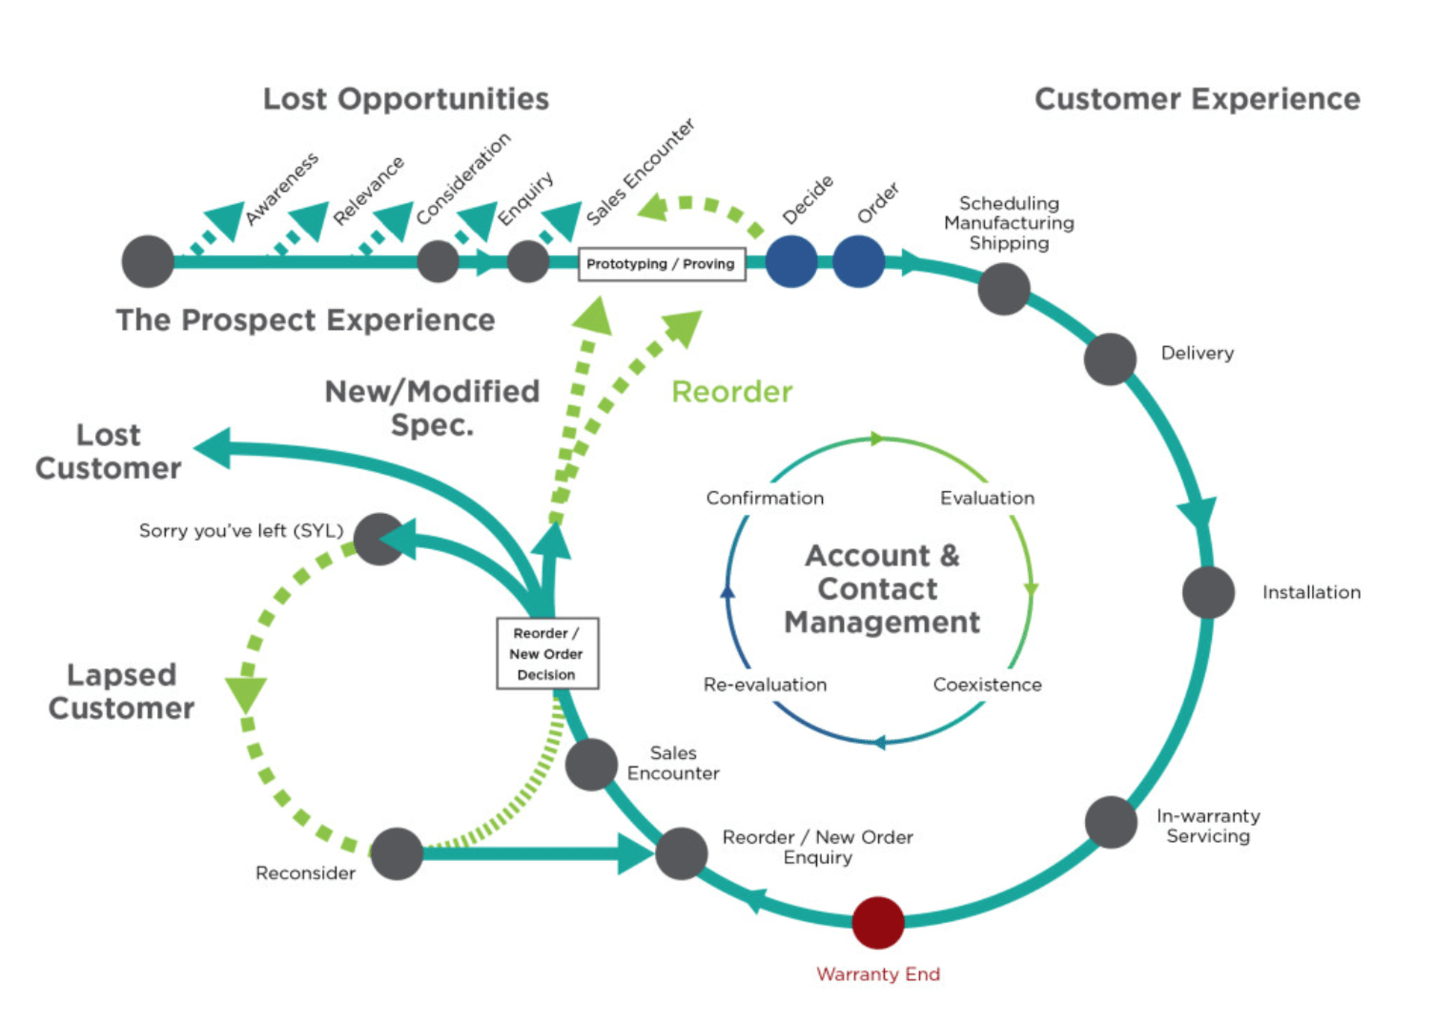 customer journey analysis example